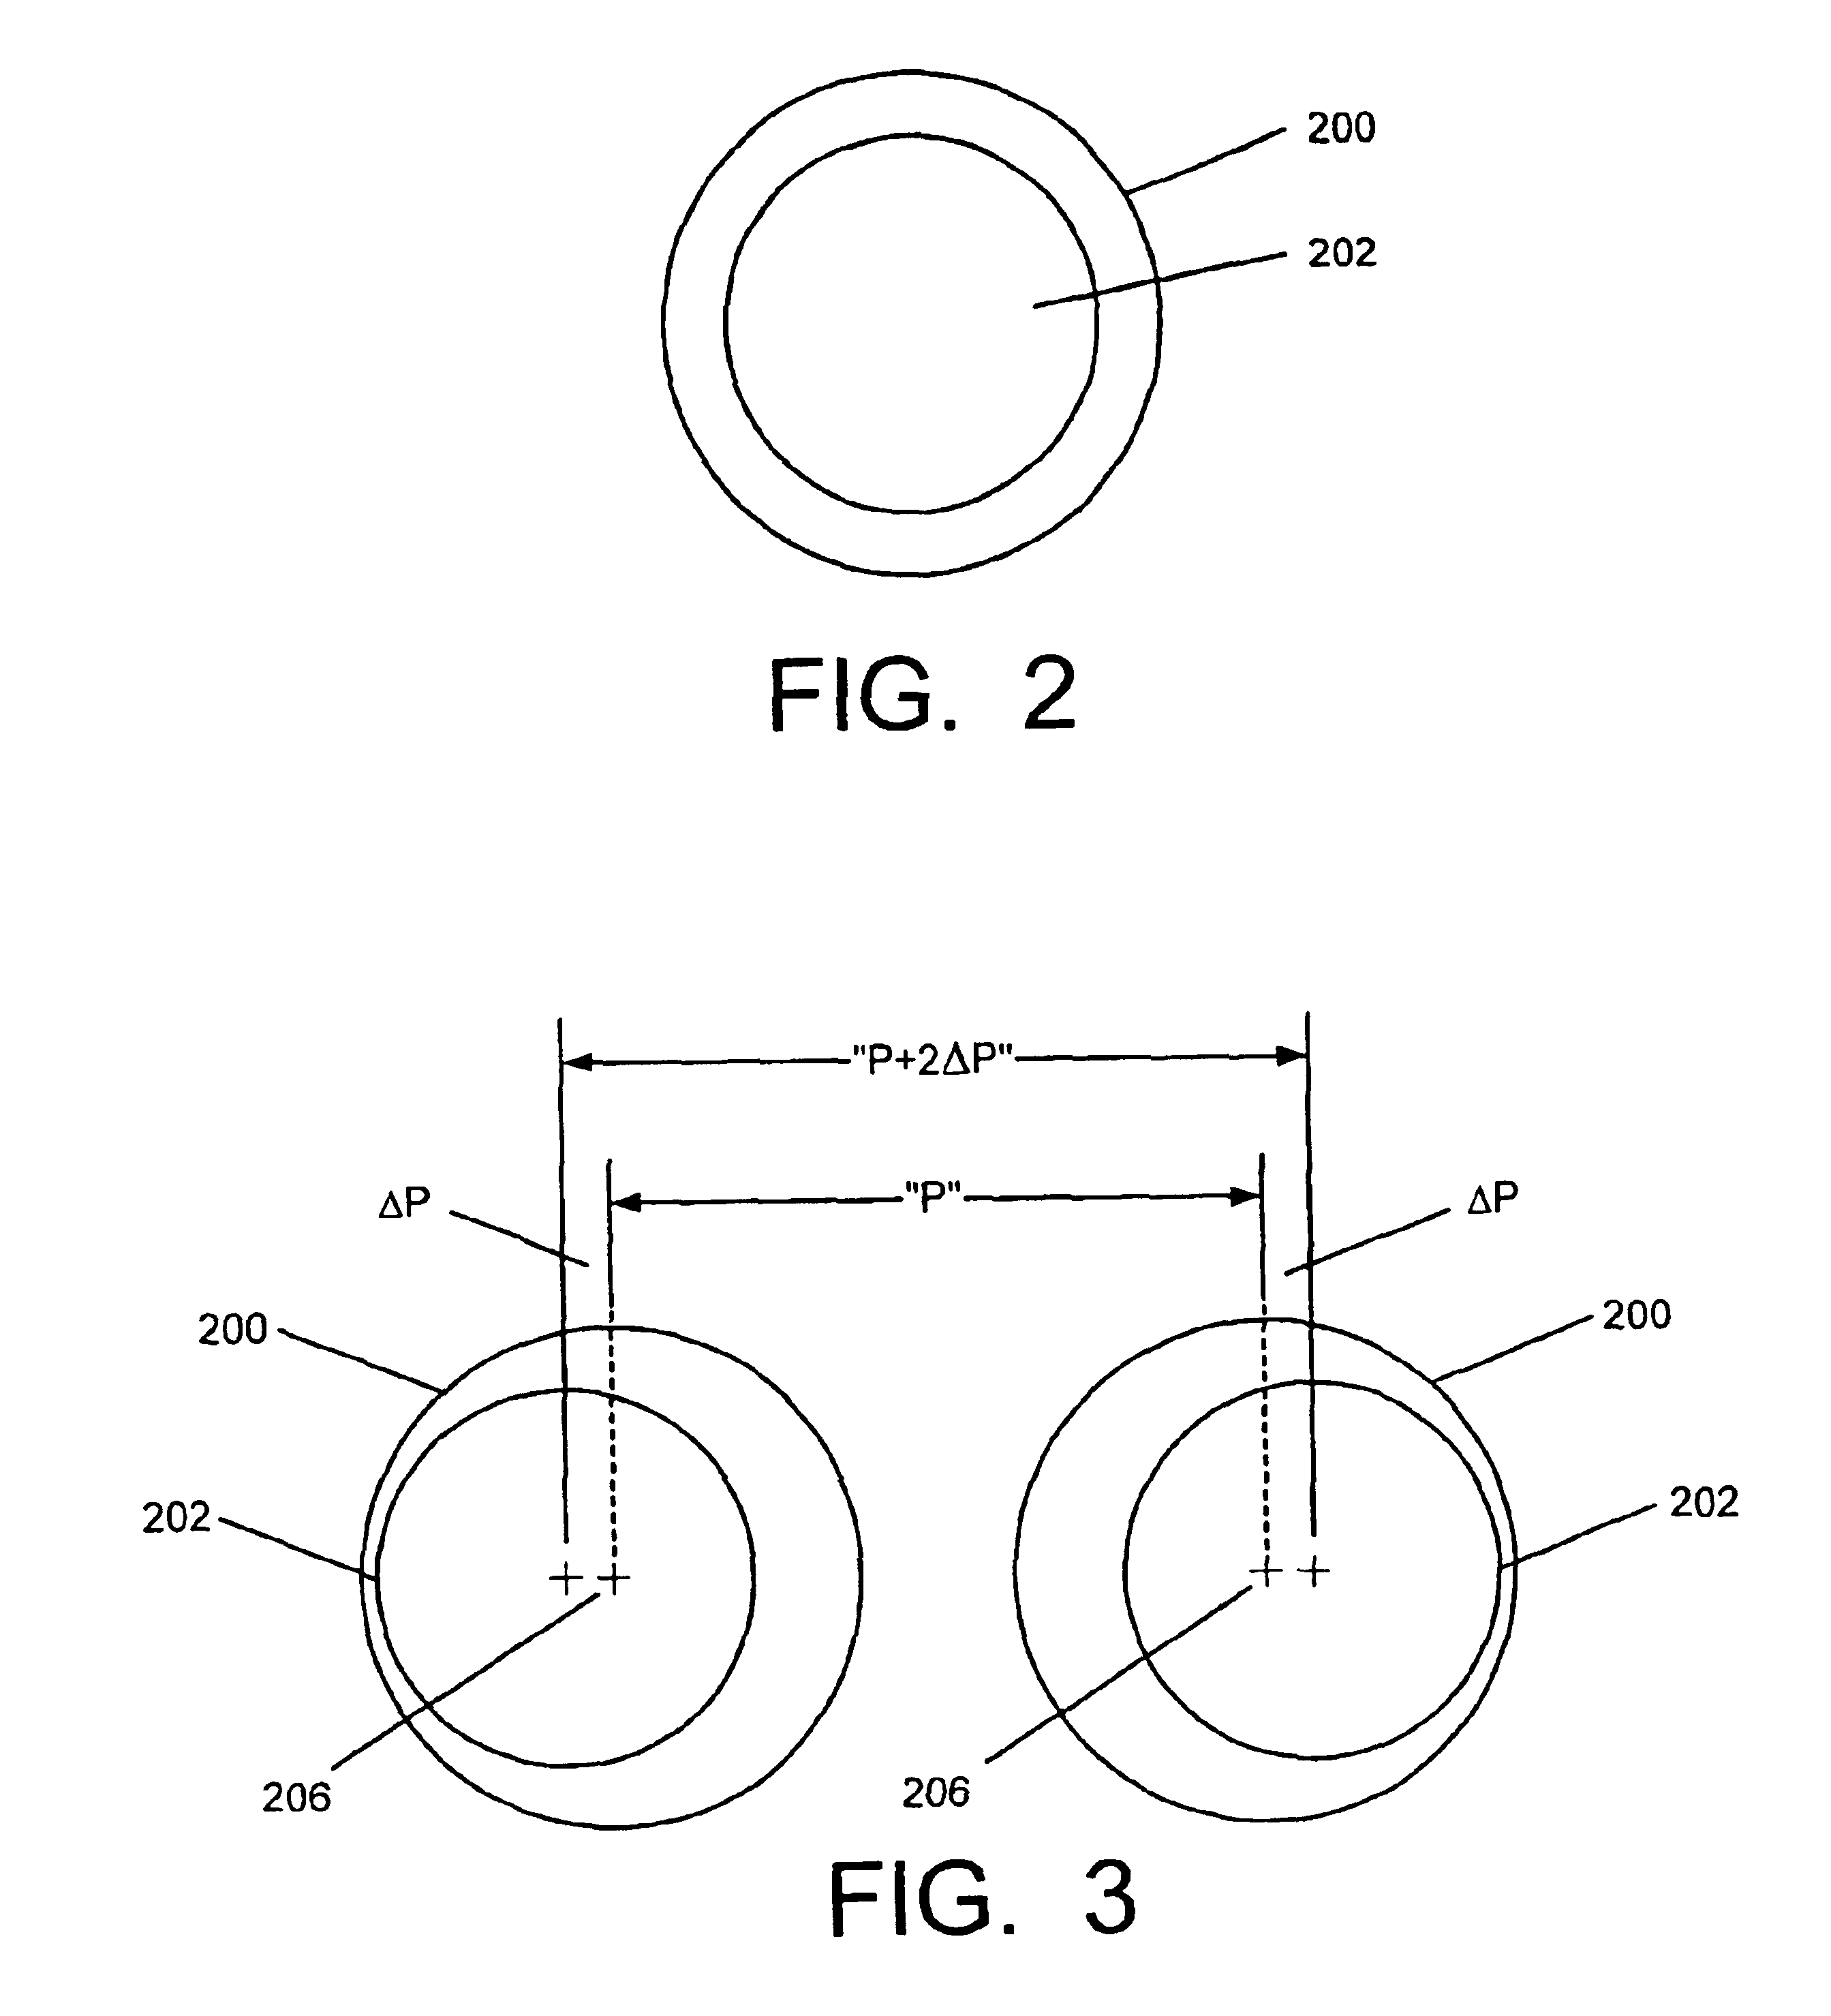 Multi-piece fiber optic component and manufacturing technique